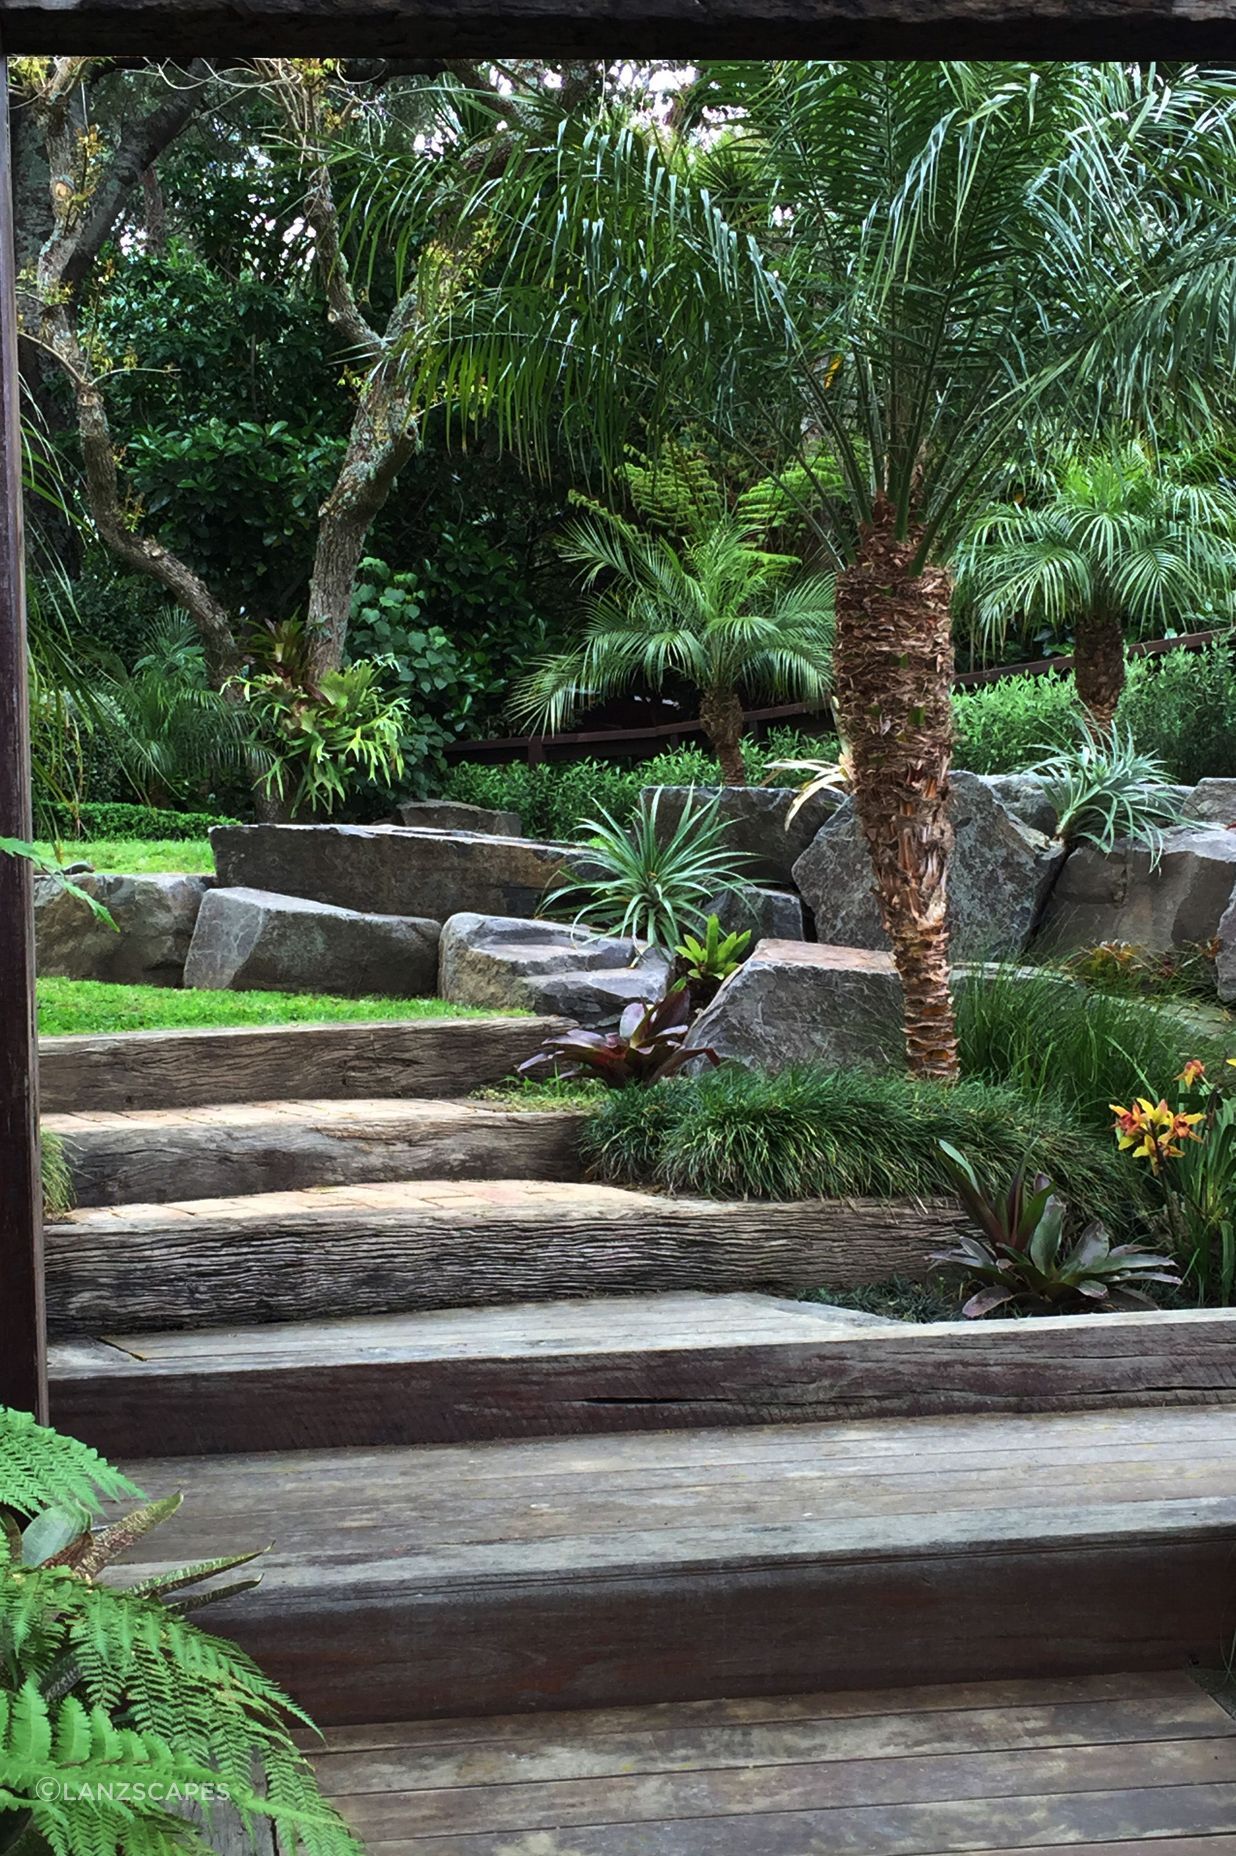 Rock retaining, hardwood sleeper steps and subtropical/native plantings